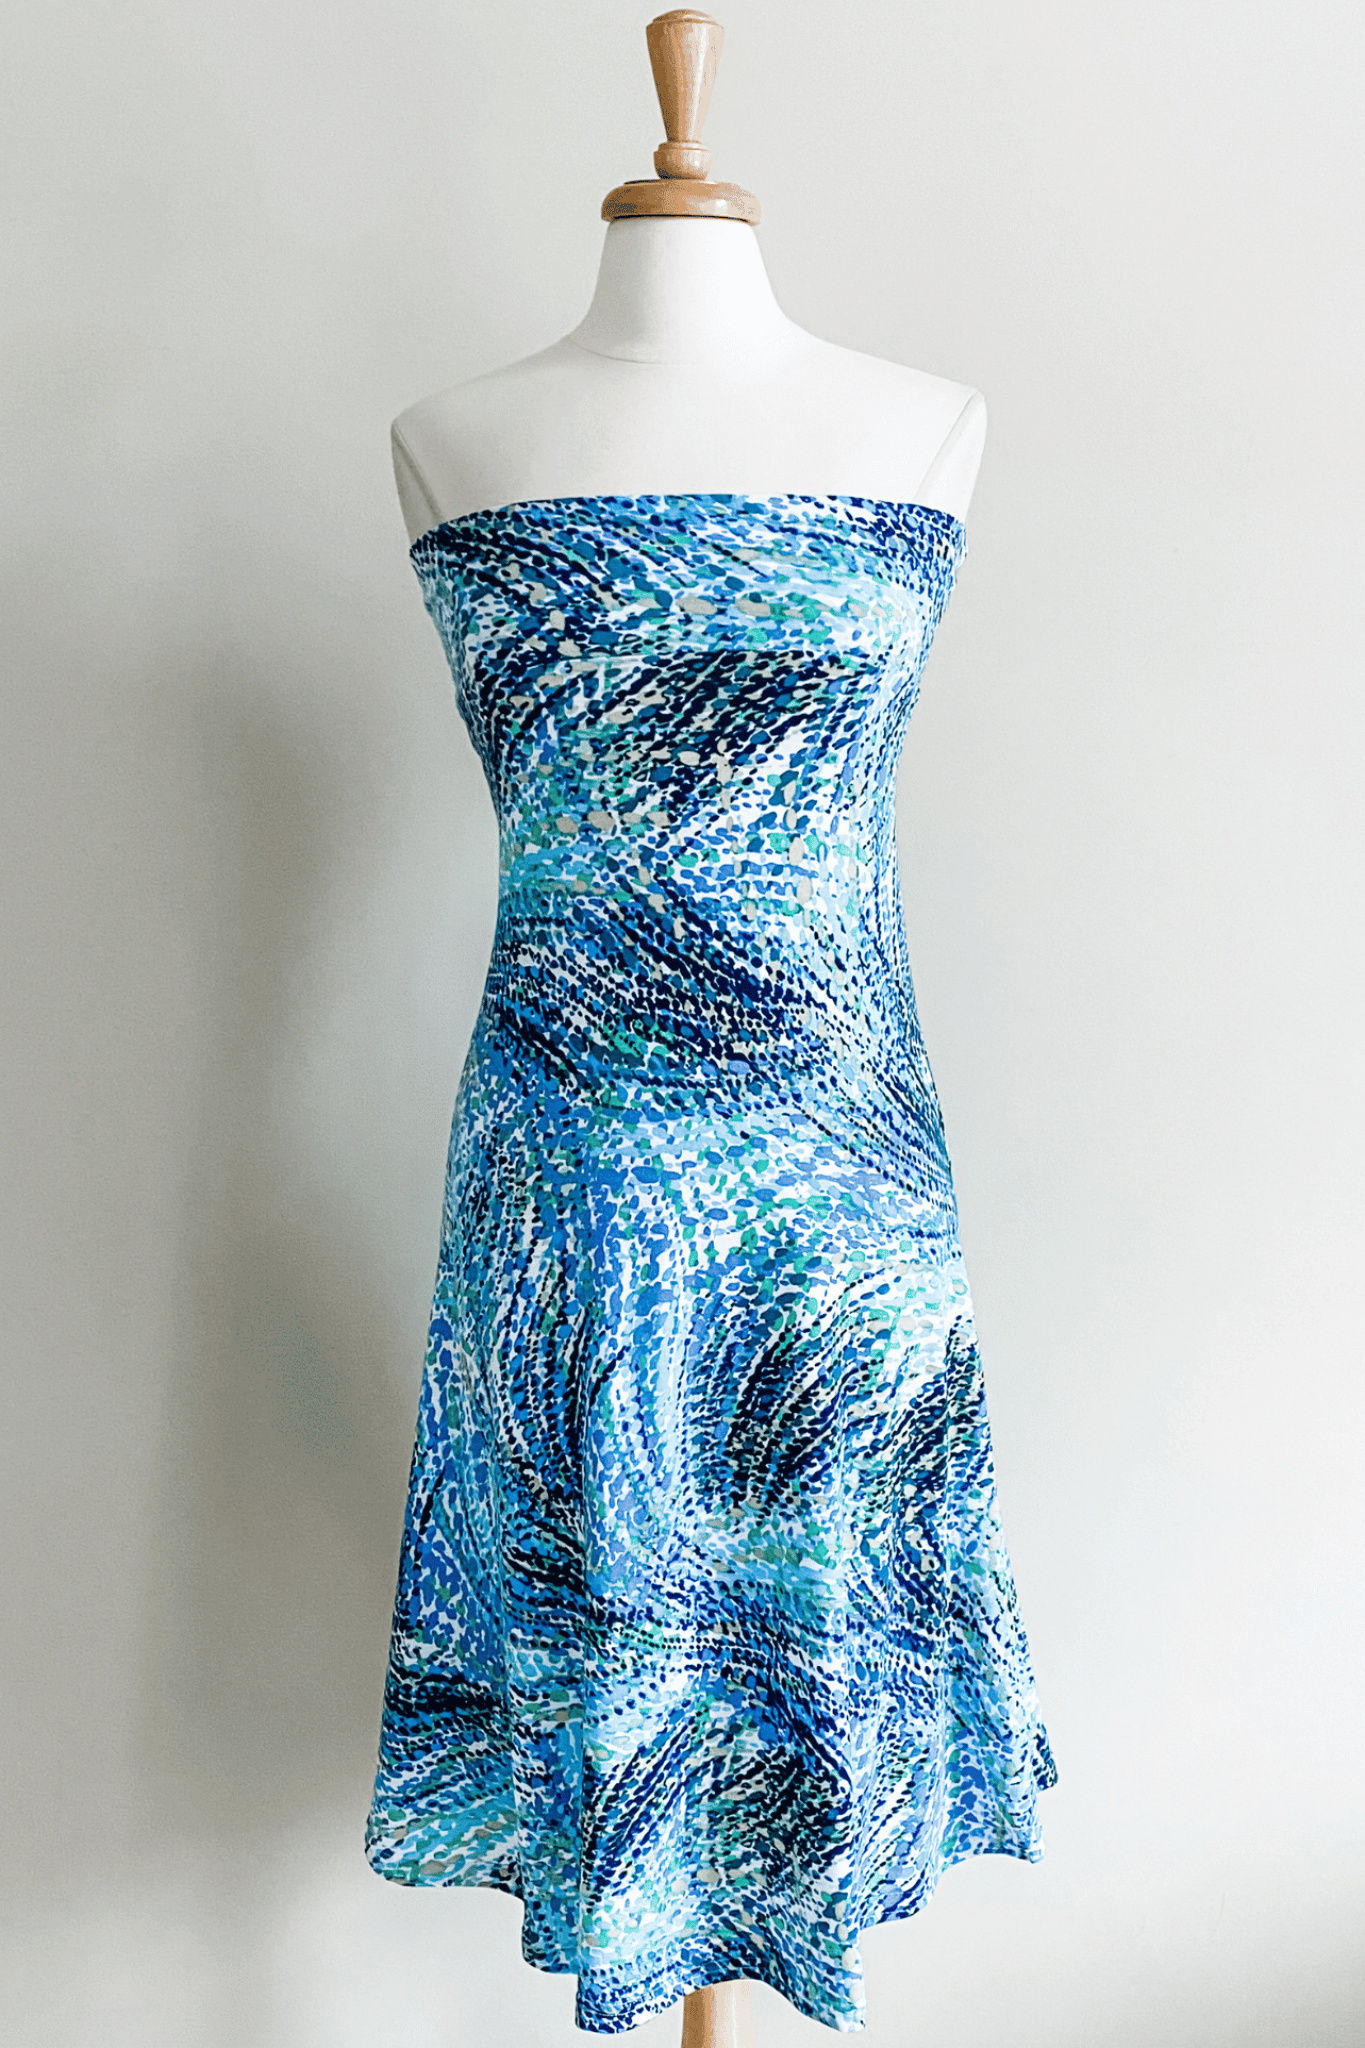 Wear-Ever Multiway Dress in Prints (Warm Weather Capsule)